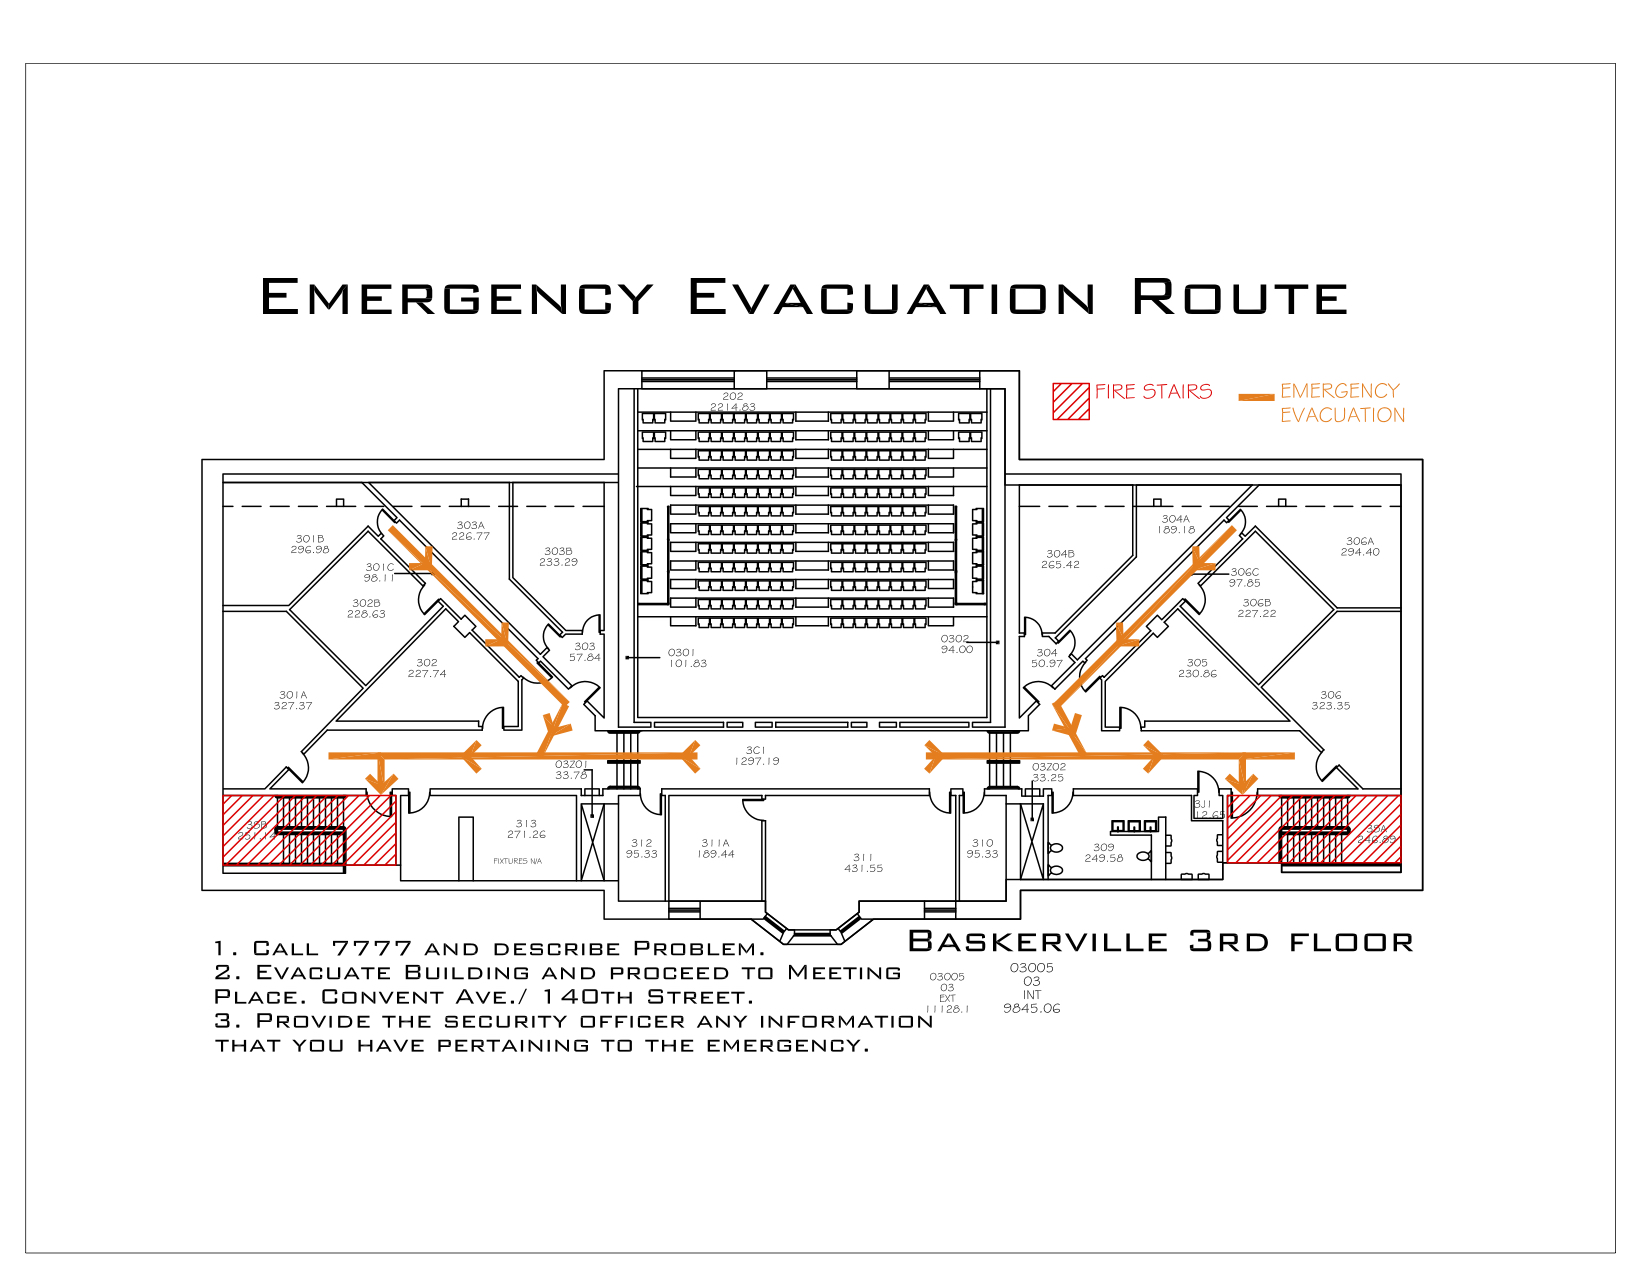 Baskerville Hall - Evacuation Route 5